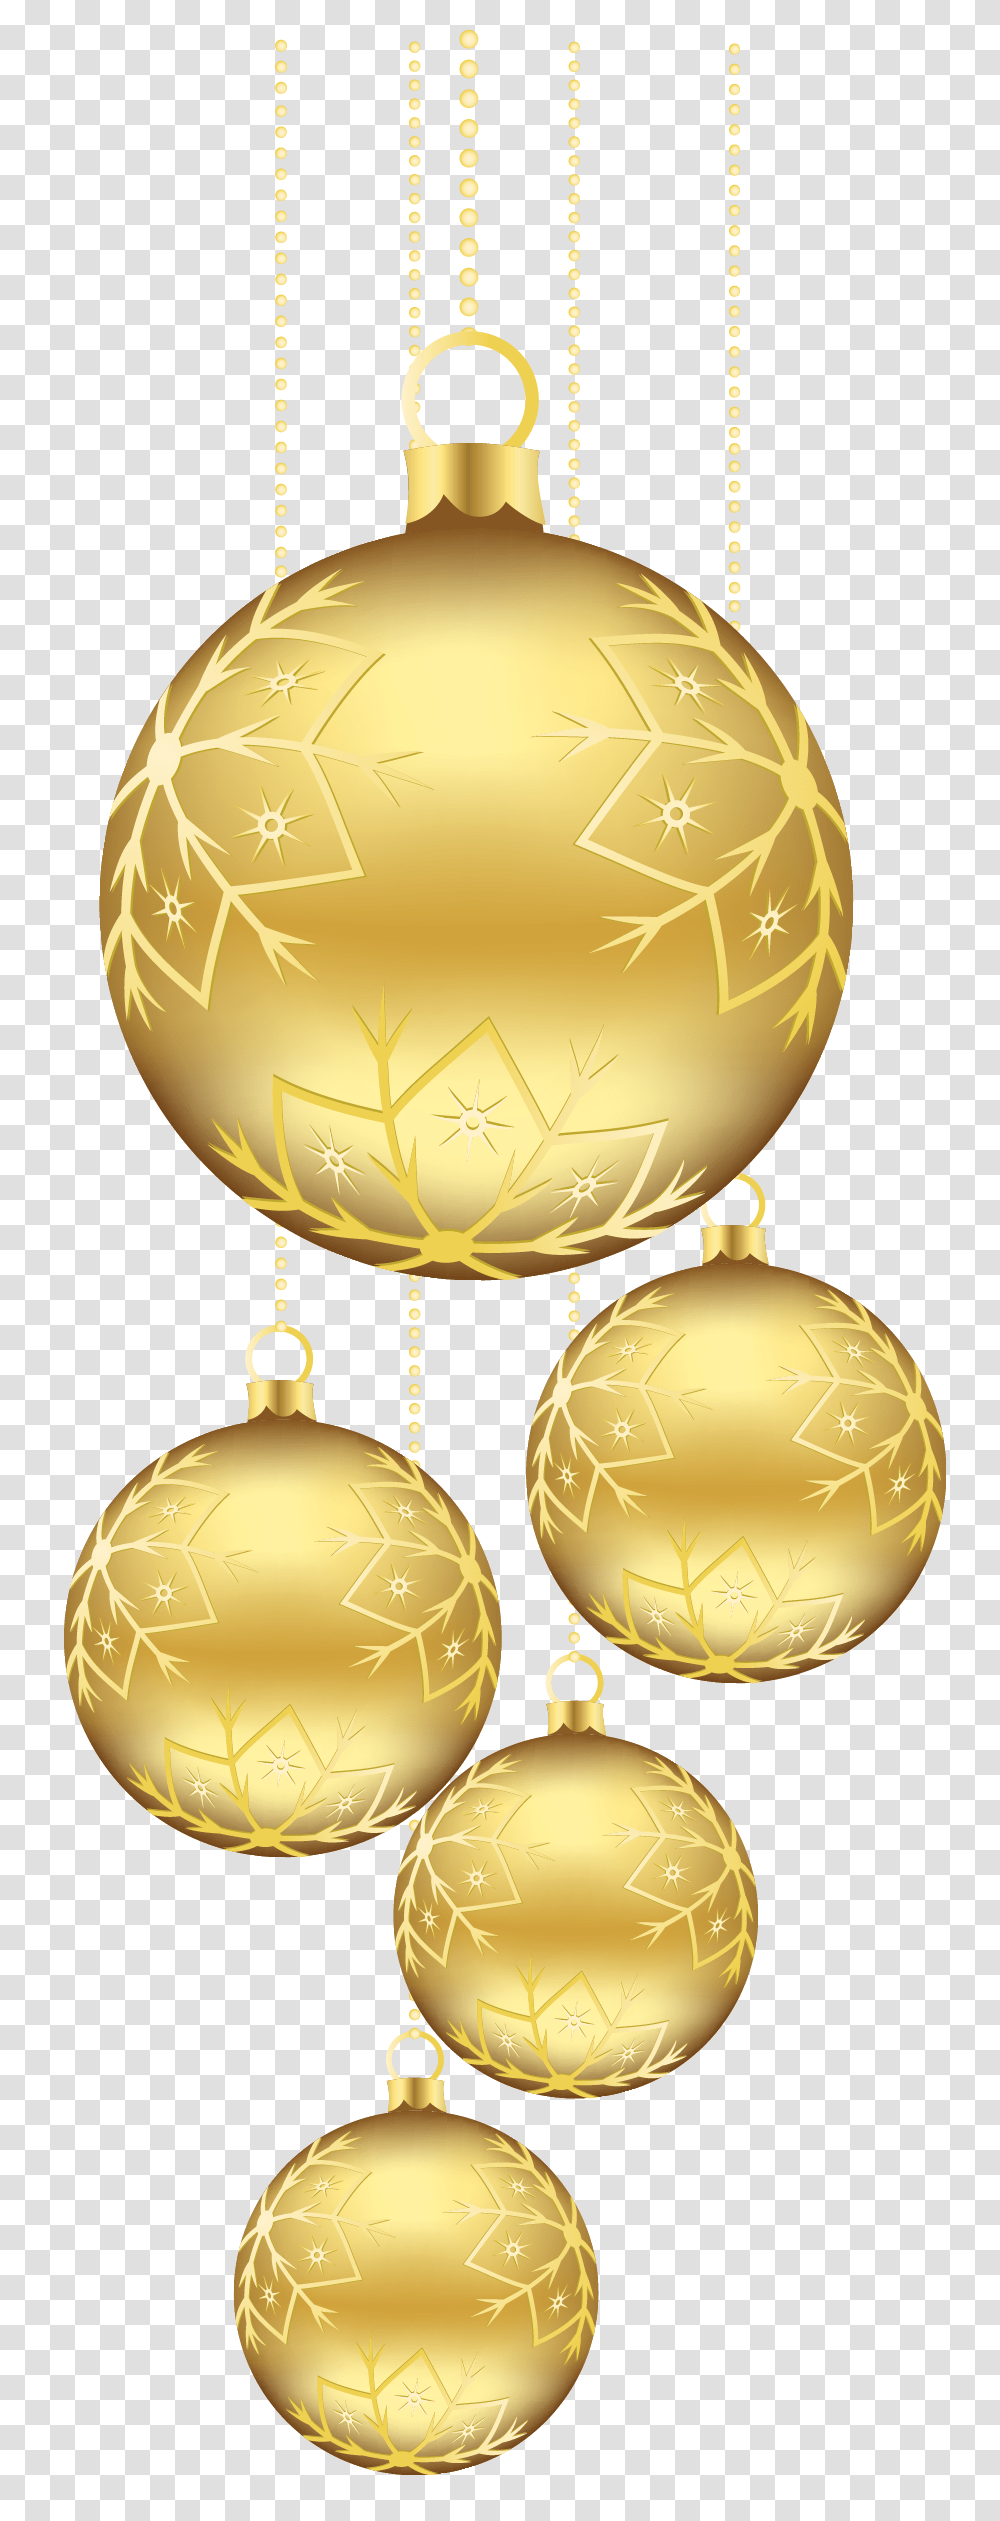 Christmas Ornaments Gold Christmas Balls Ornaments Christmas Golden Ball, Gold Medal, Trophy, Lighting, Treasure Transparent Png